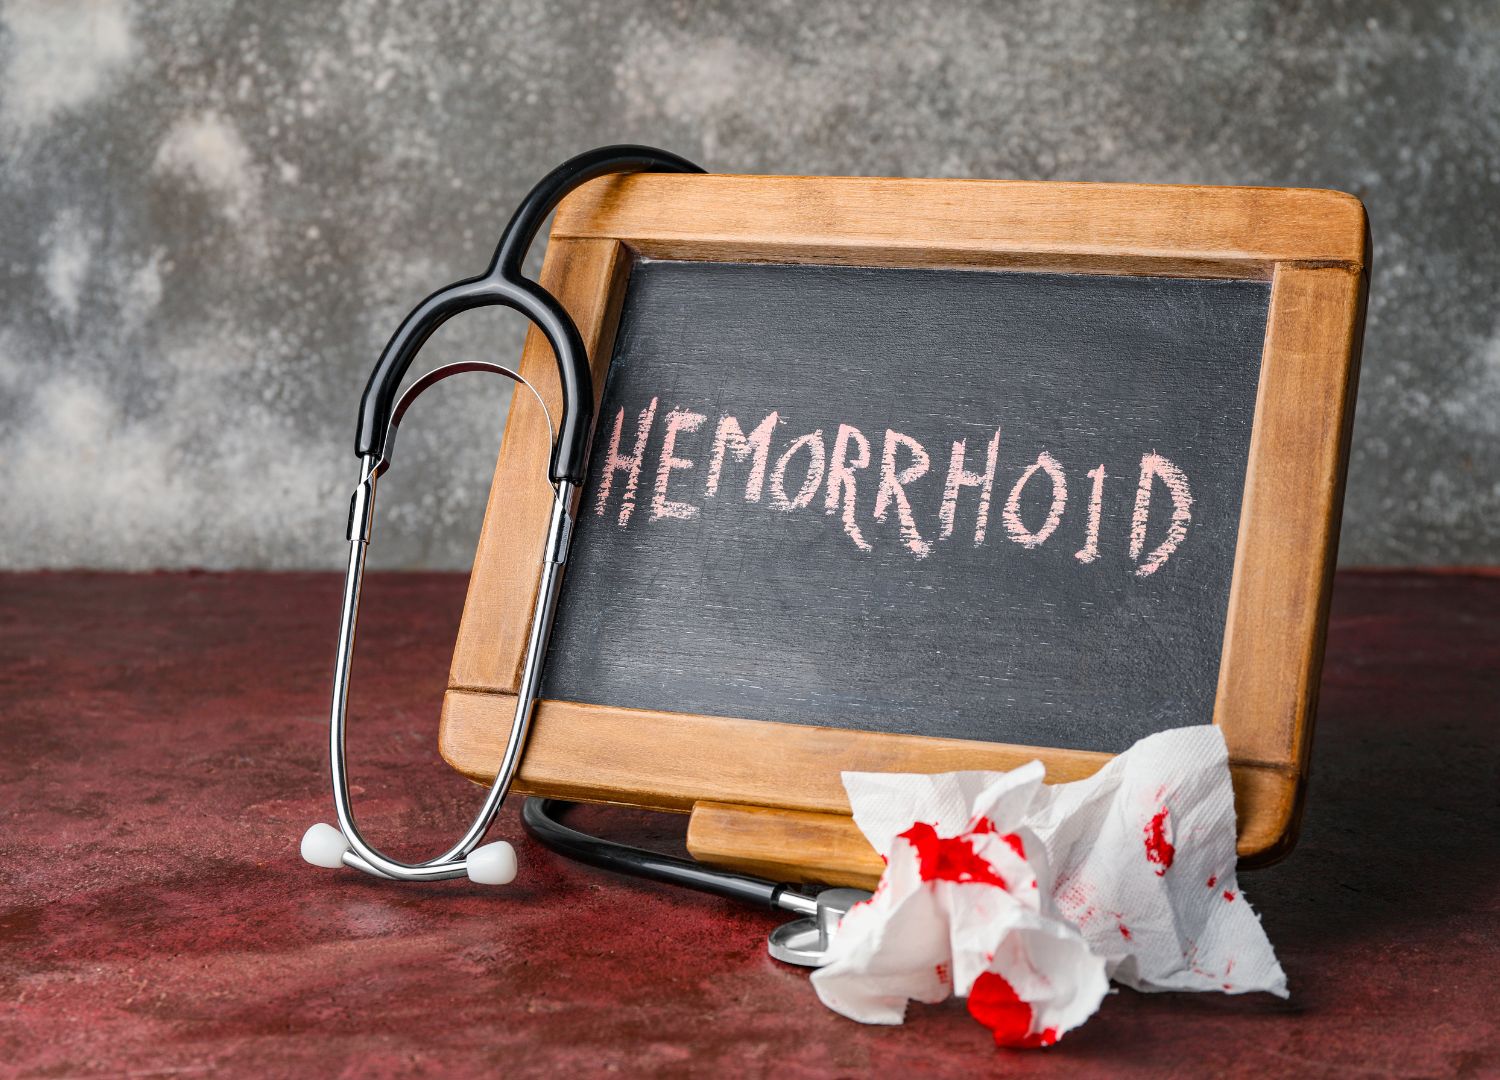 Hemorrhoids: Bleeding from my back passage